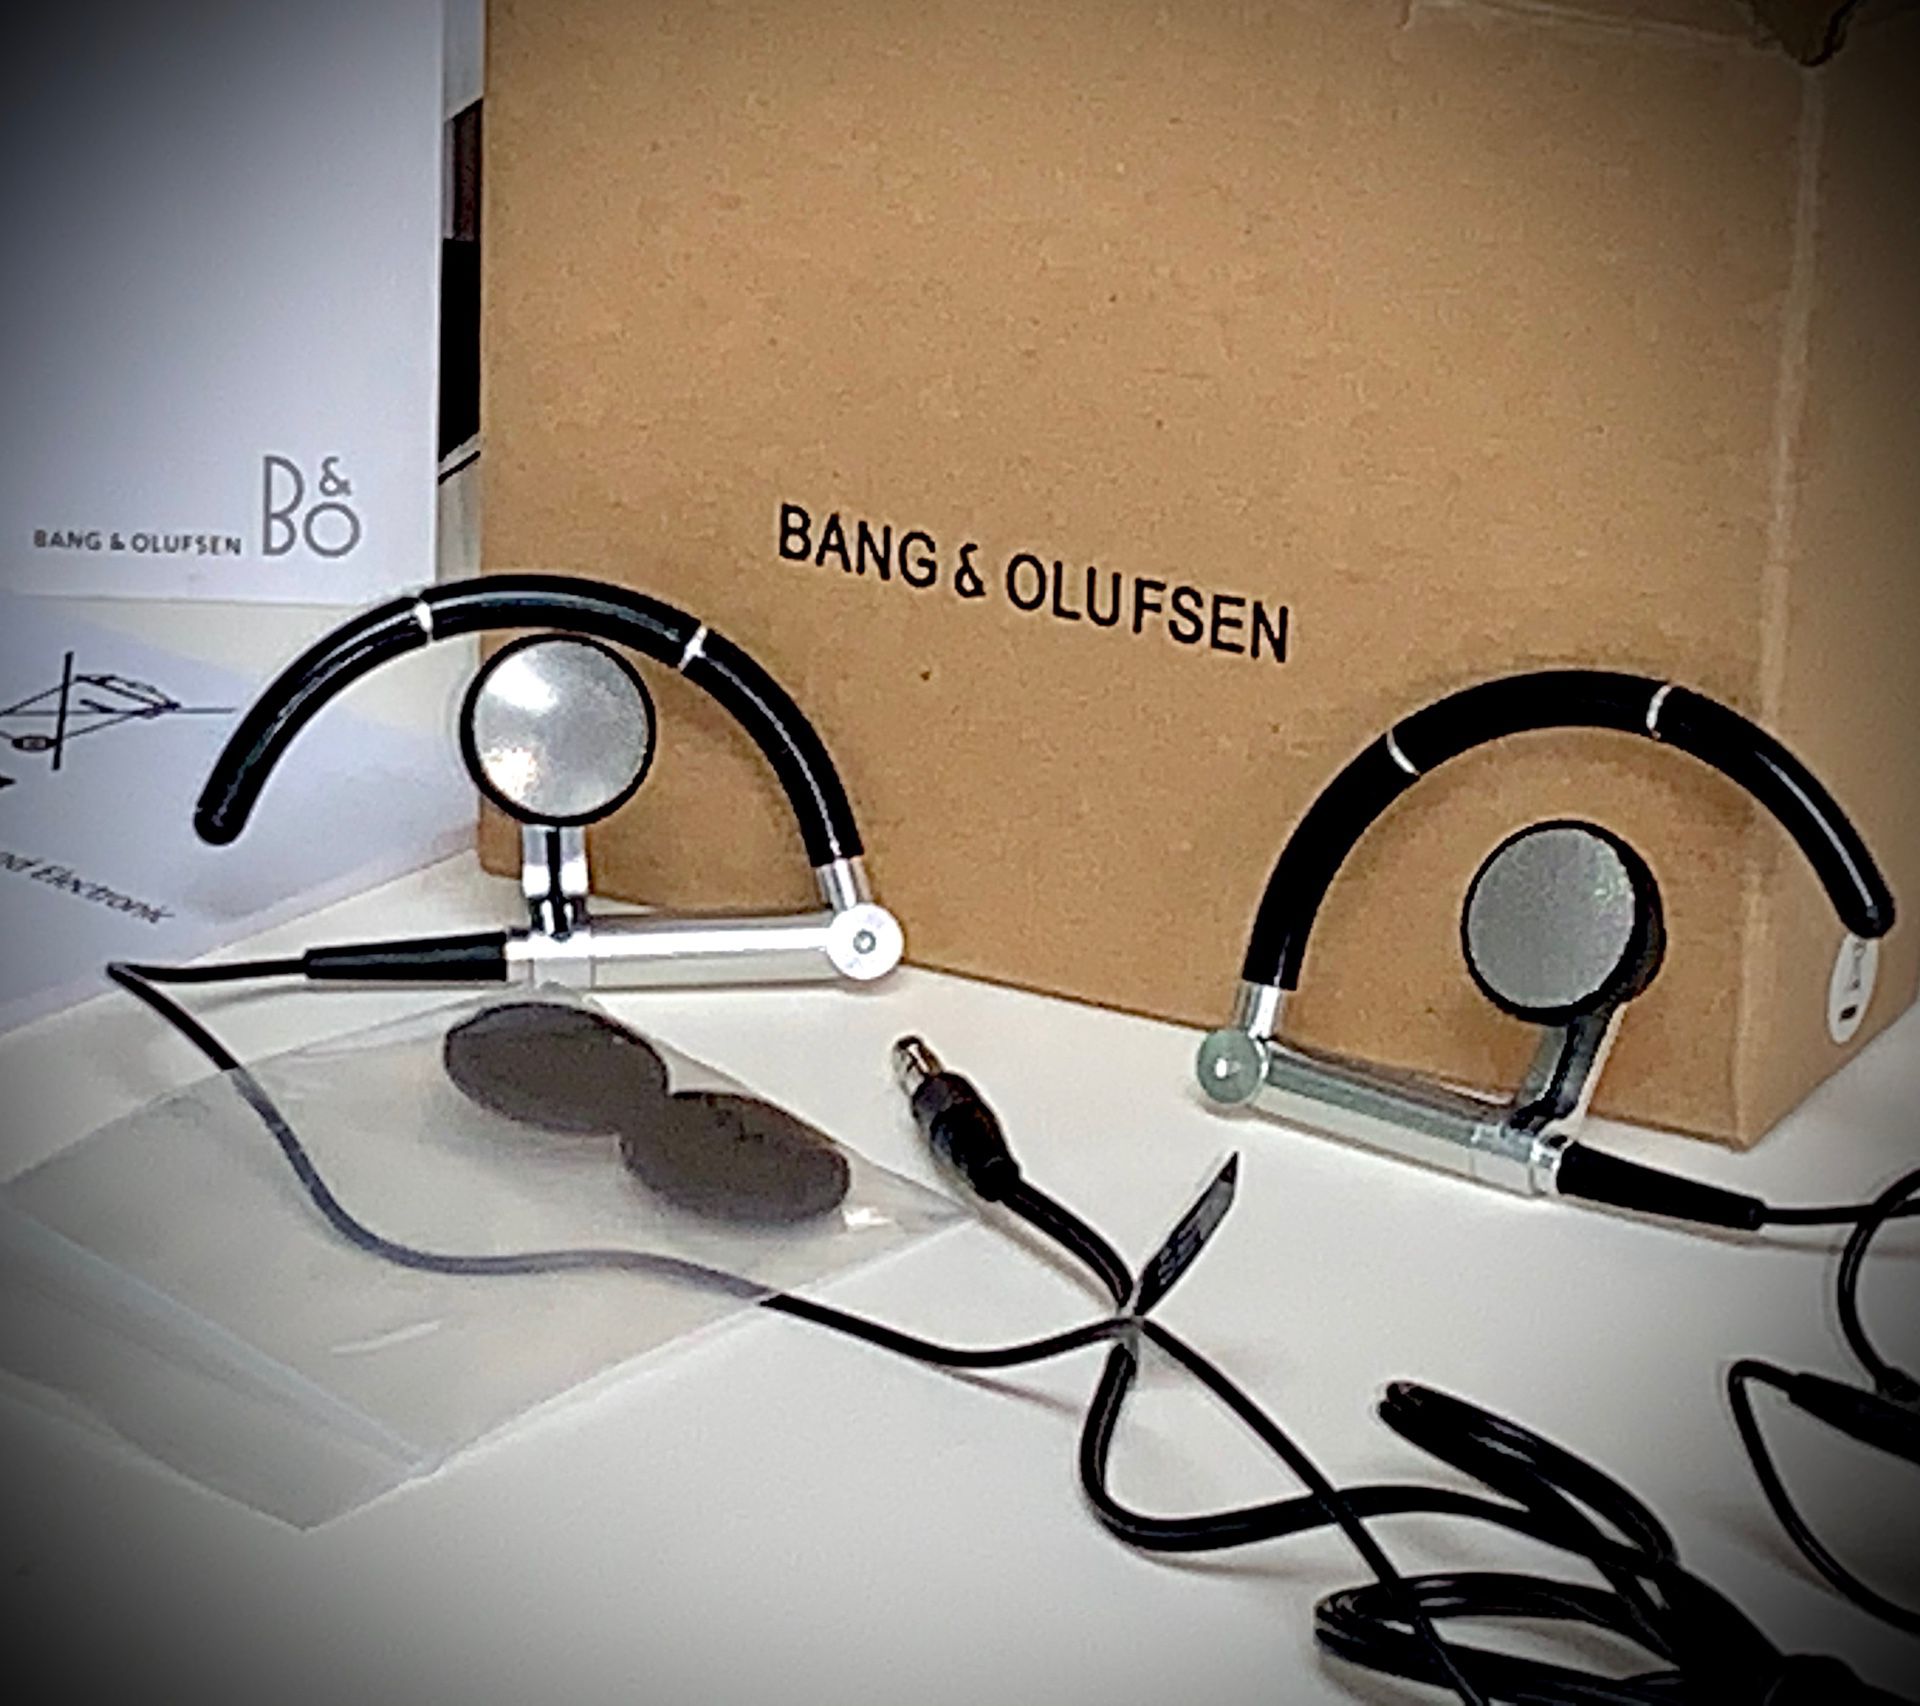 Bang & Olufsen earbuds